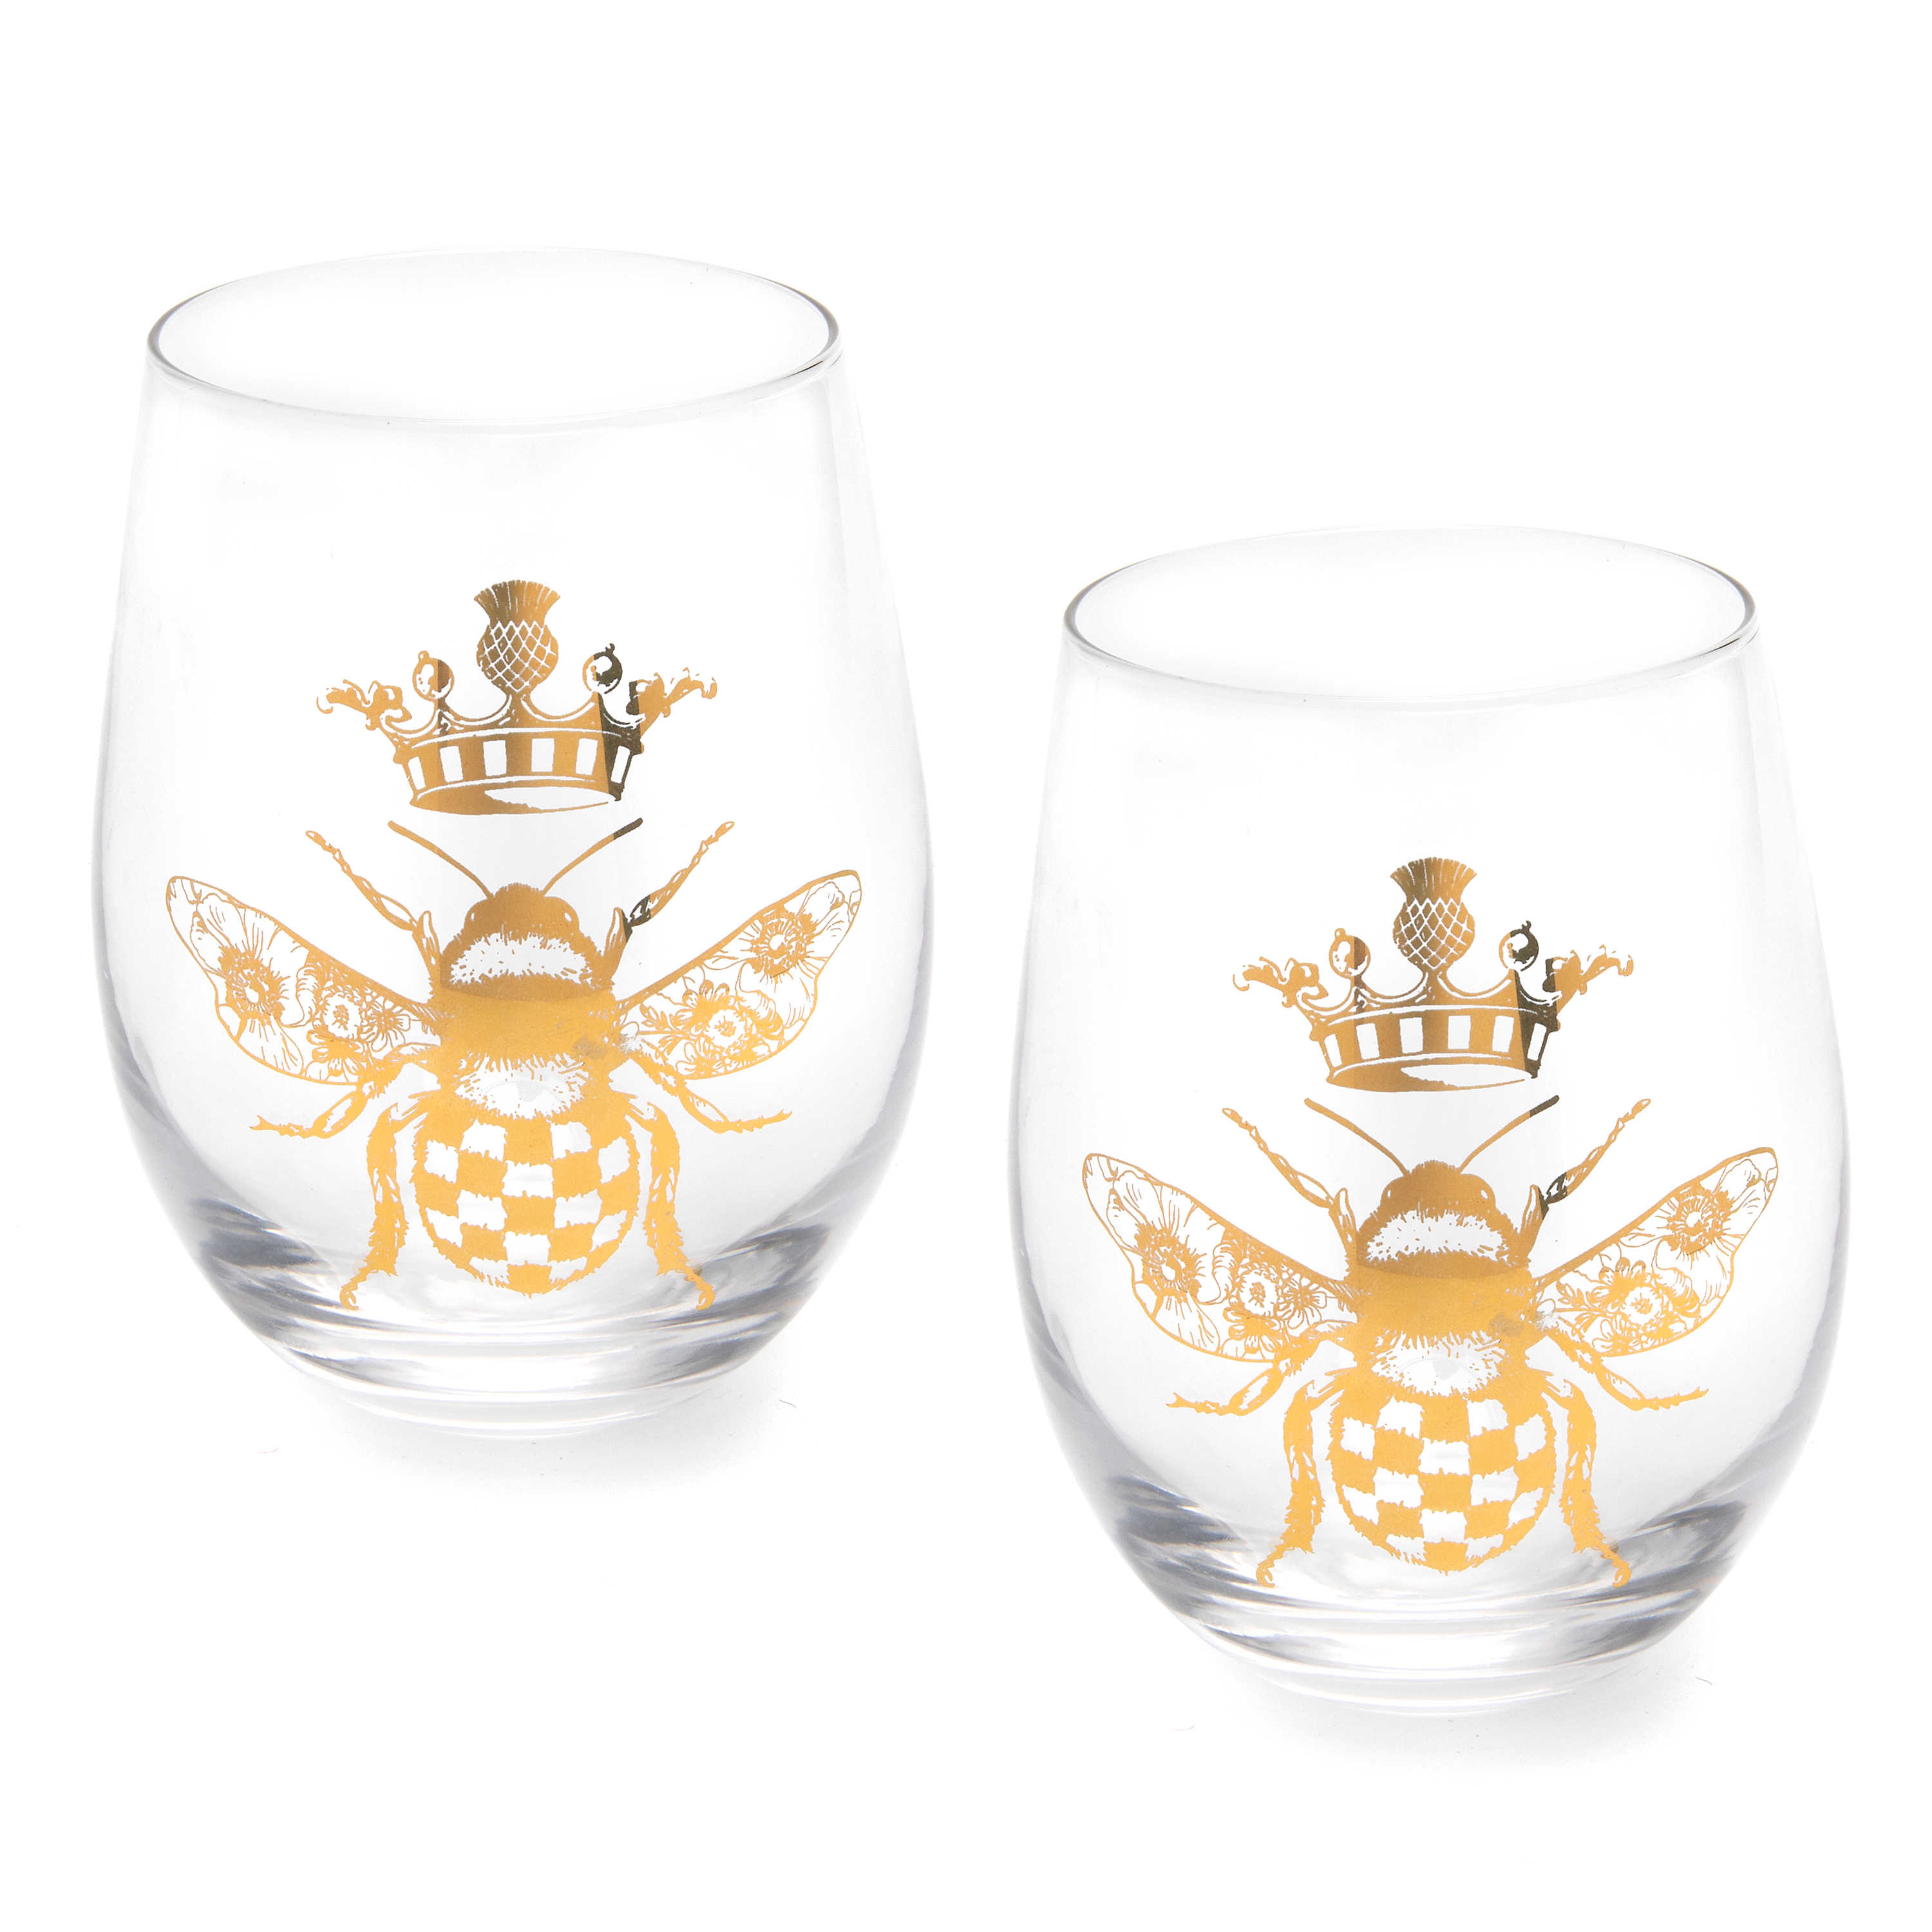 Queen Bee Stemless Wine Glasses, Set of 4 mackenzie-childs Panama 0